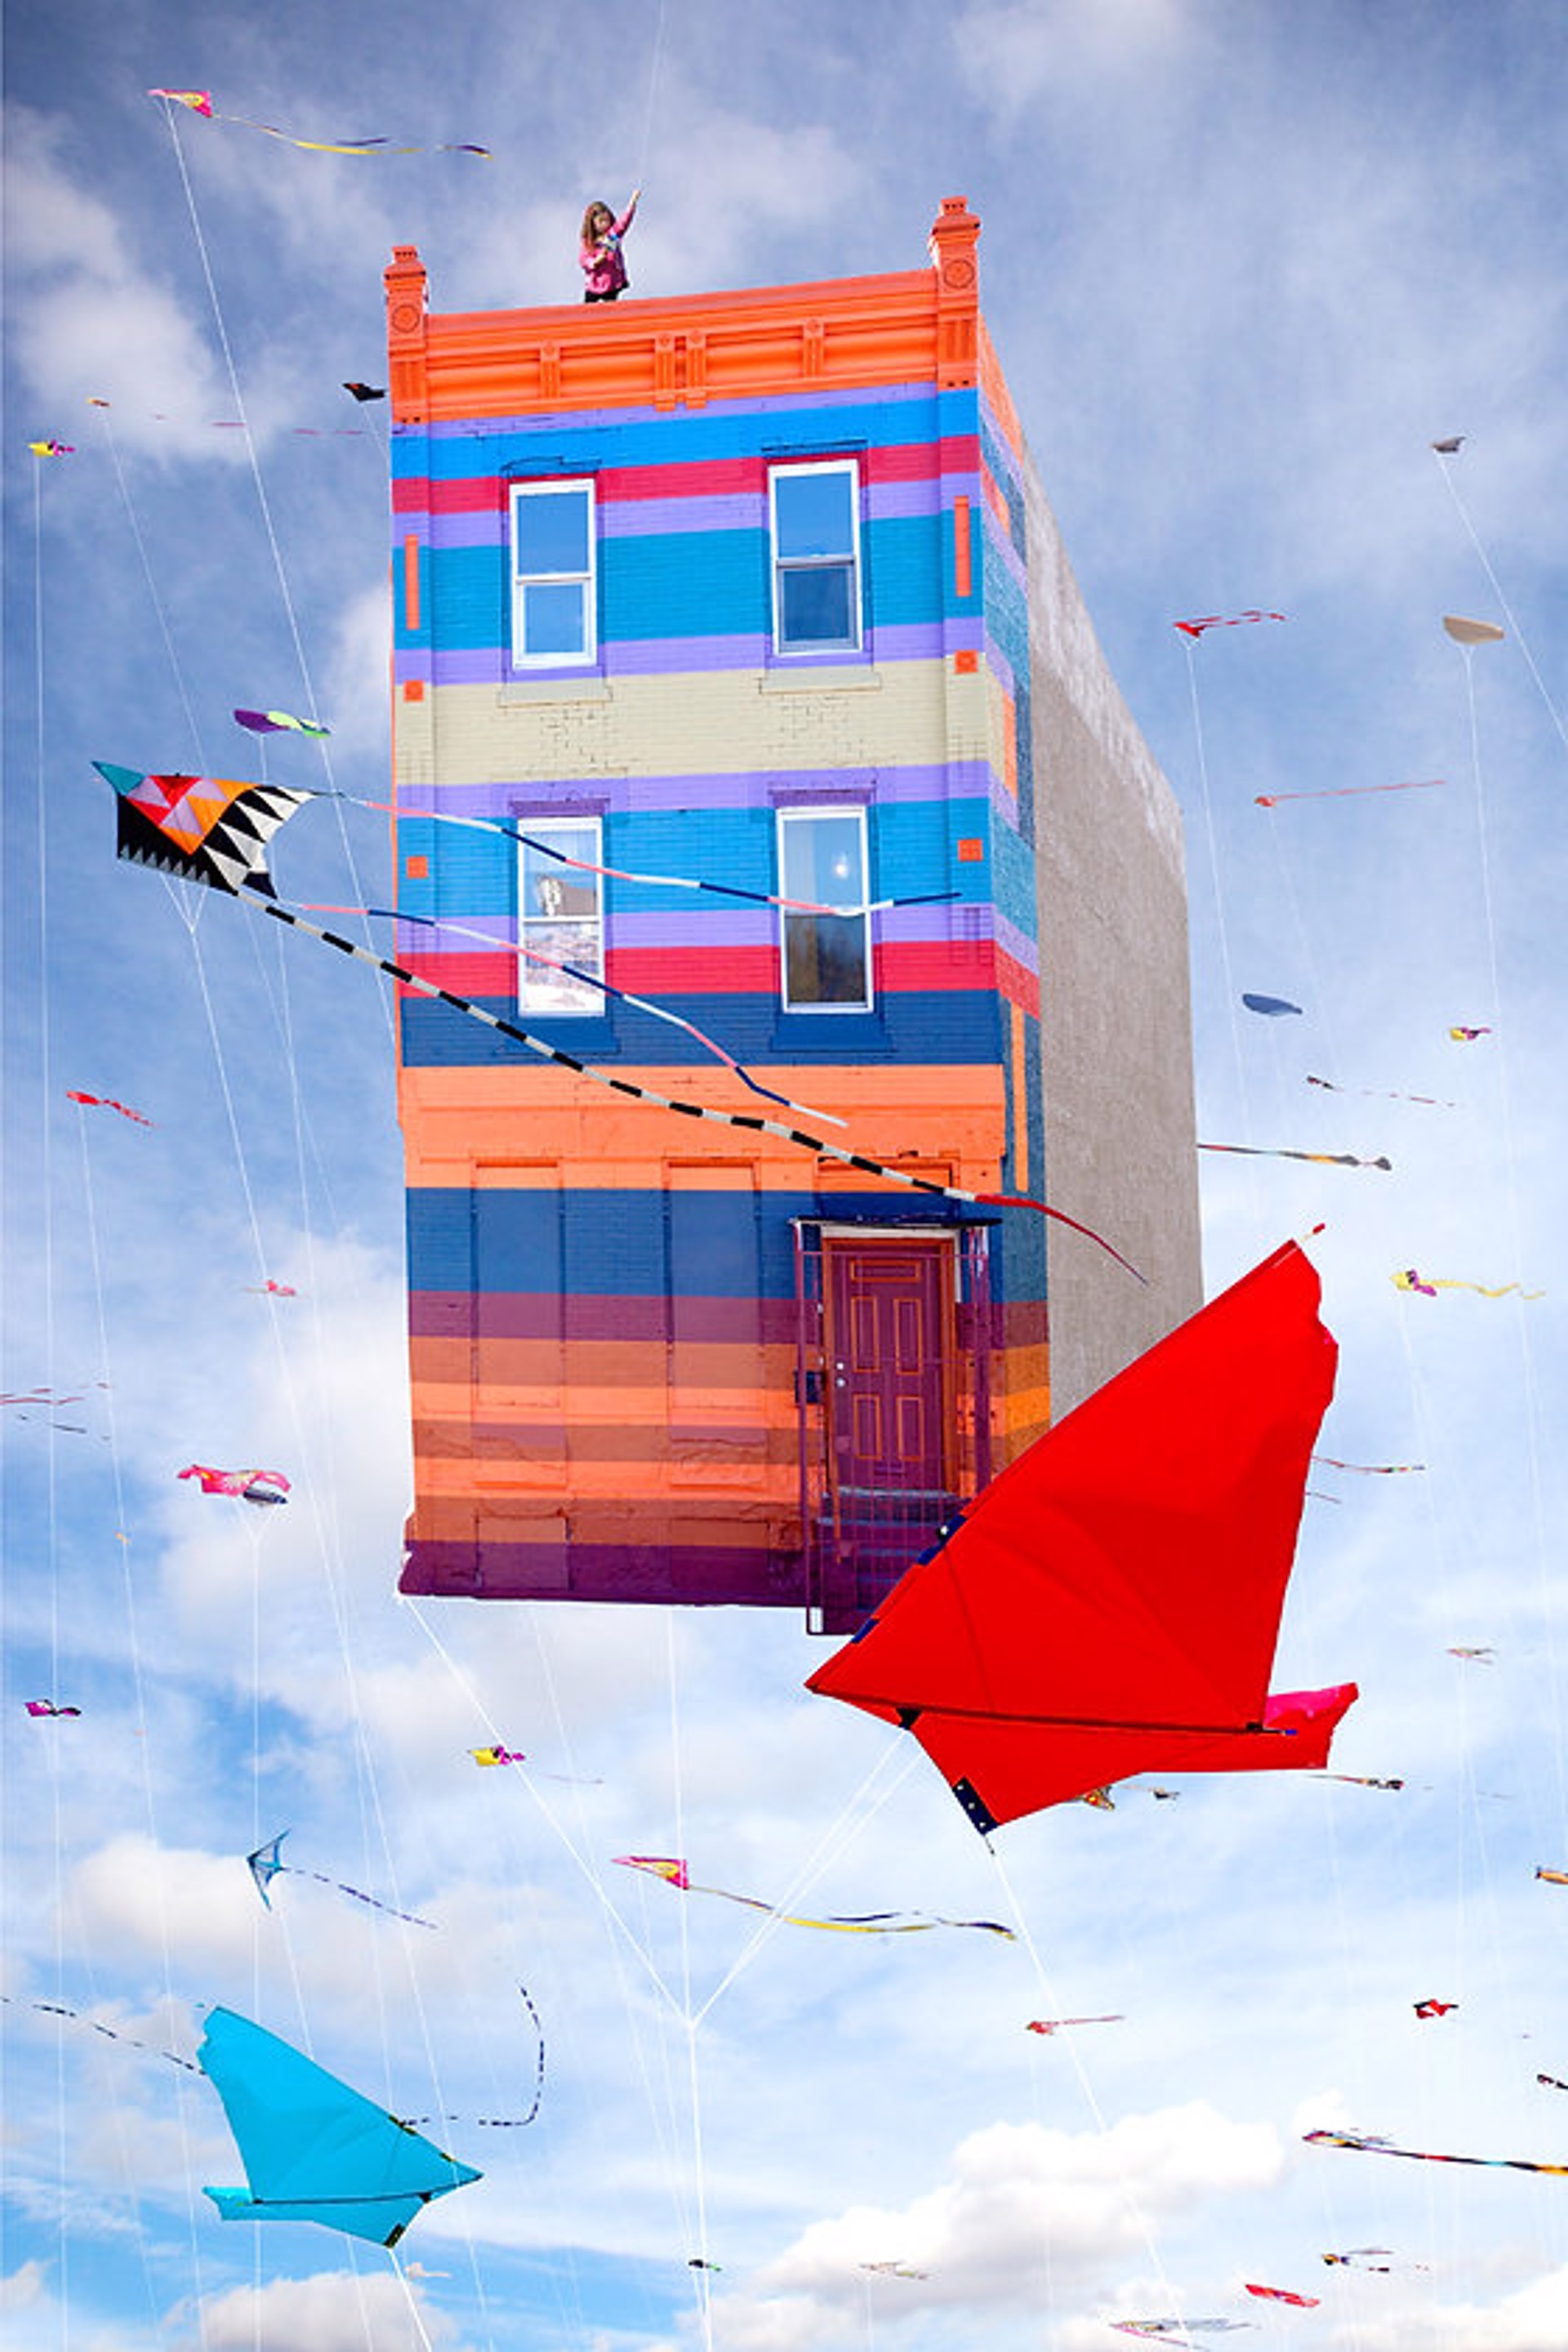 Go Fly A Kite by Kate Harrold